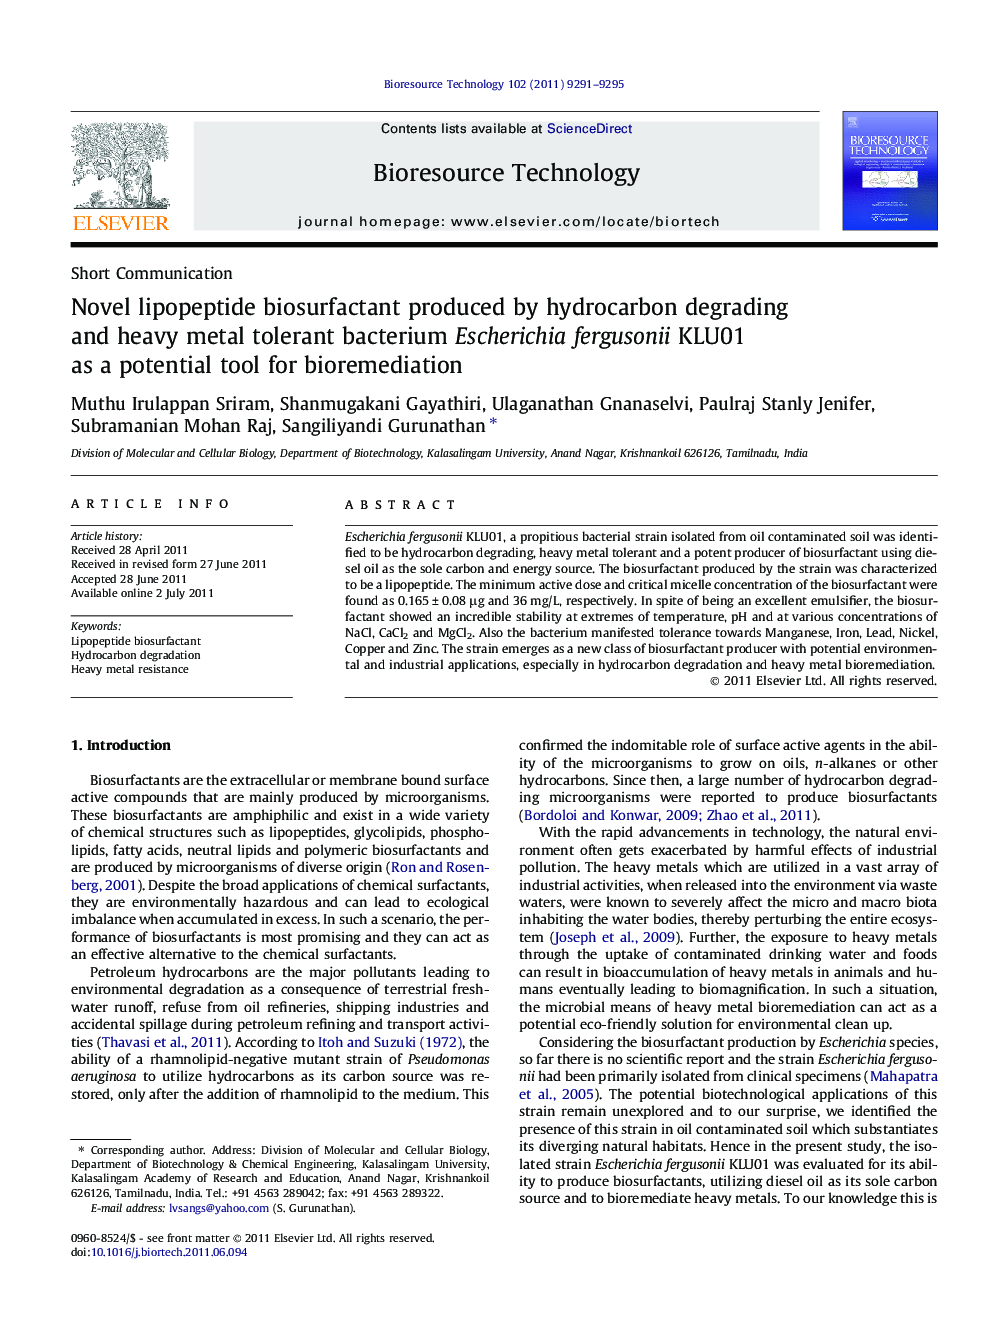 Novel lipopeptide biosurfactant produced by hydrocarbon degrading and heavy metal tolerant bacterium Escherichia fergusonii KLU01 as a potential tool for bioremediation